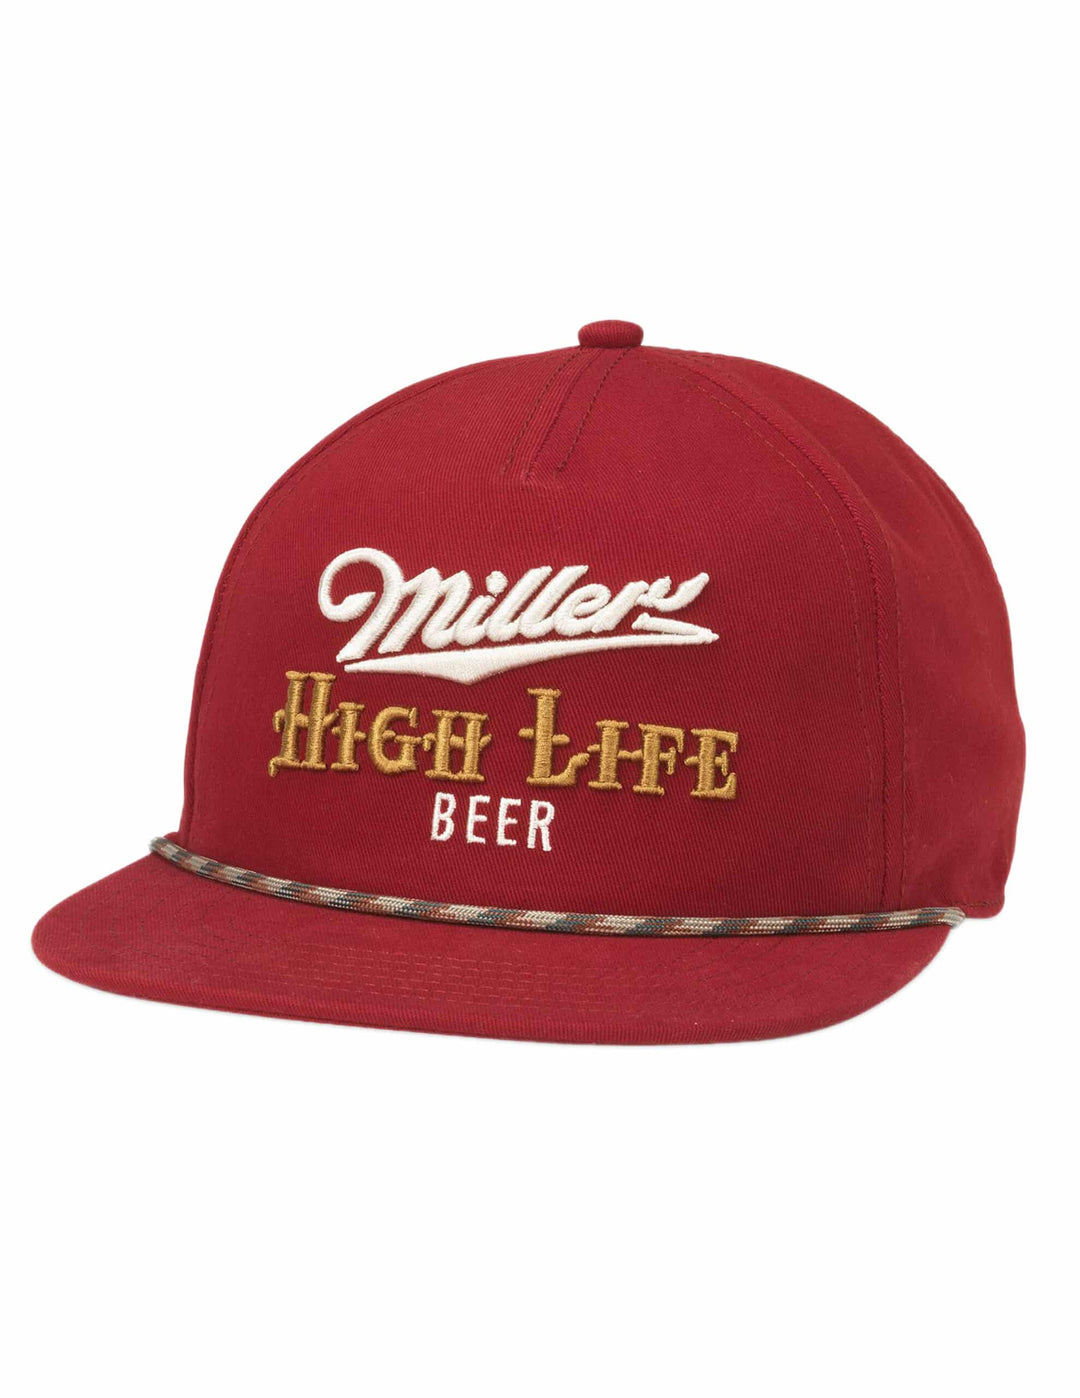 American Needle Coachella Miller High Life Hat